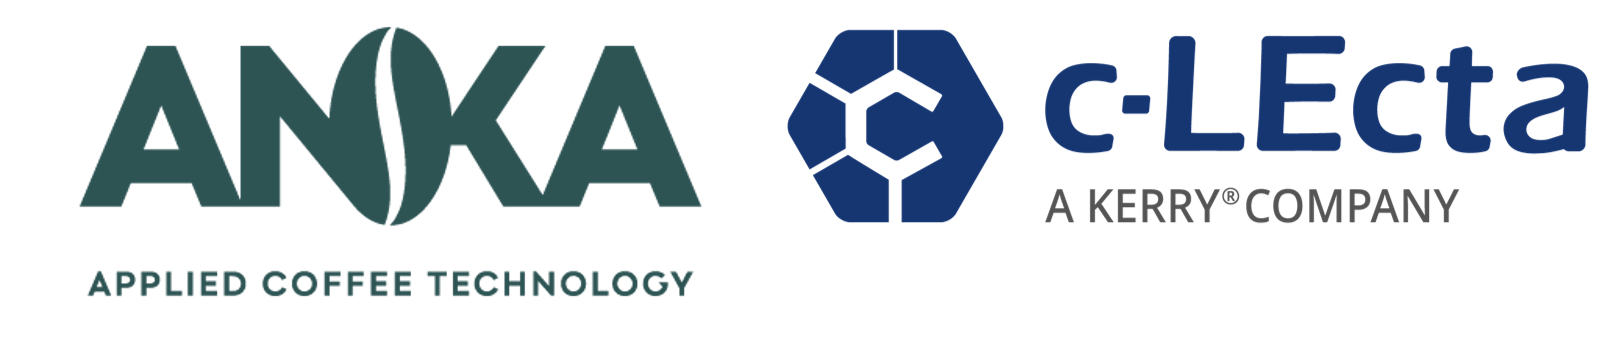 Logo-c-LEcta_Anka3